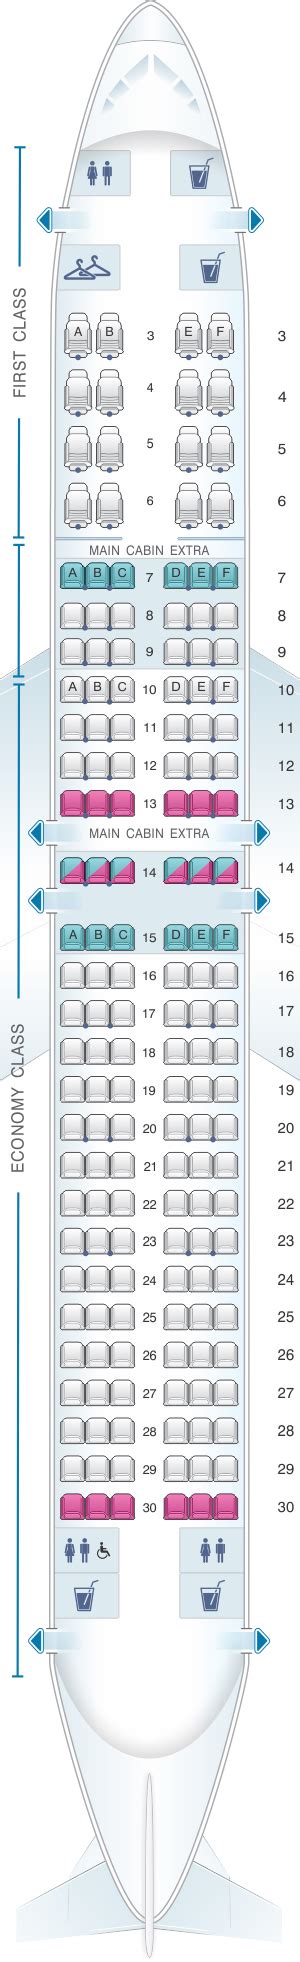 seat map american airlines boeing   seatmaestro